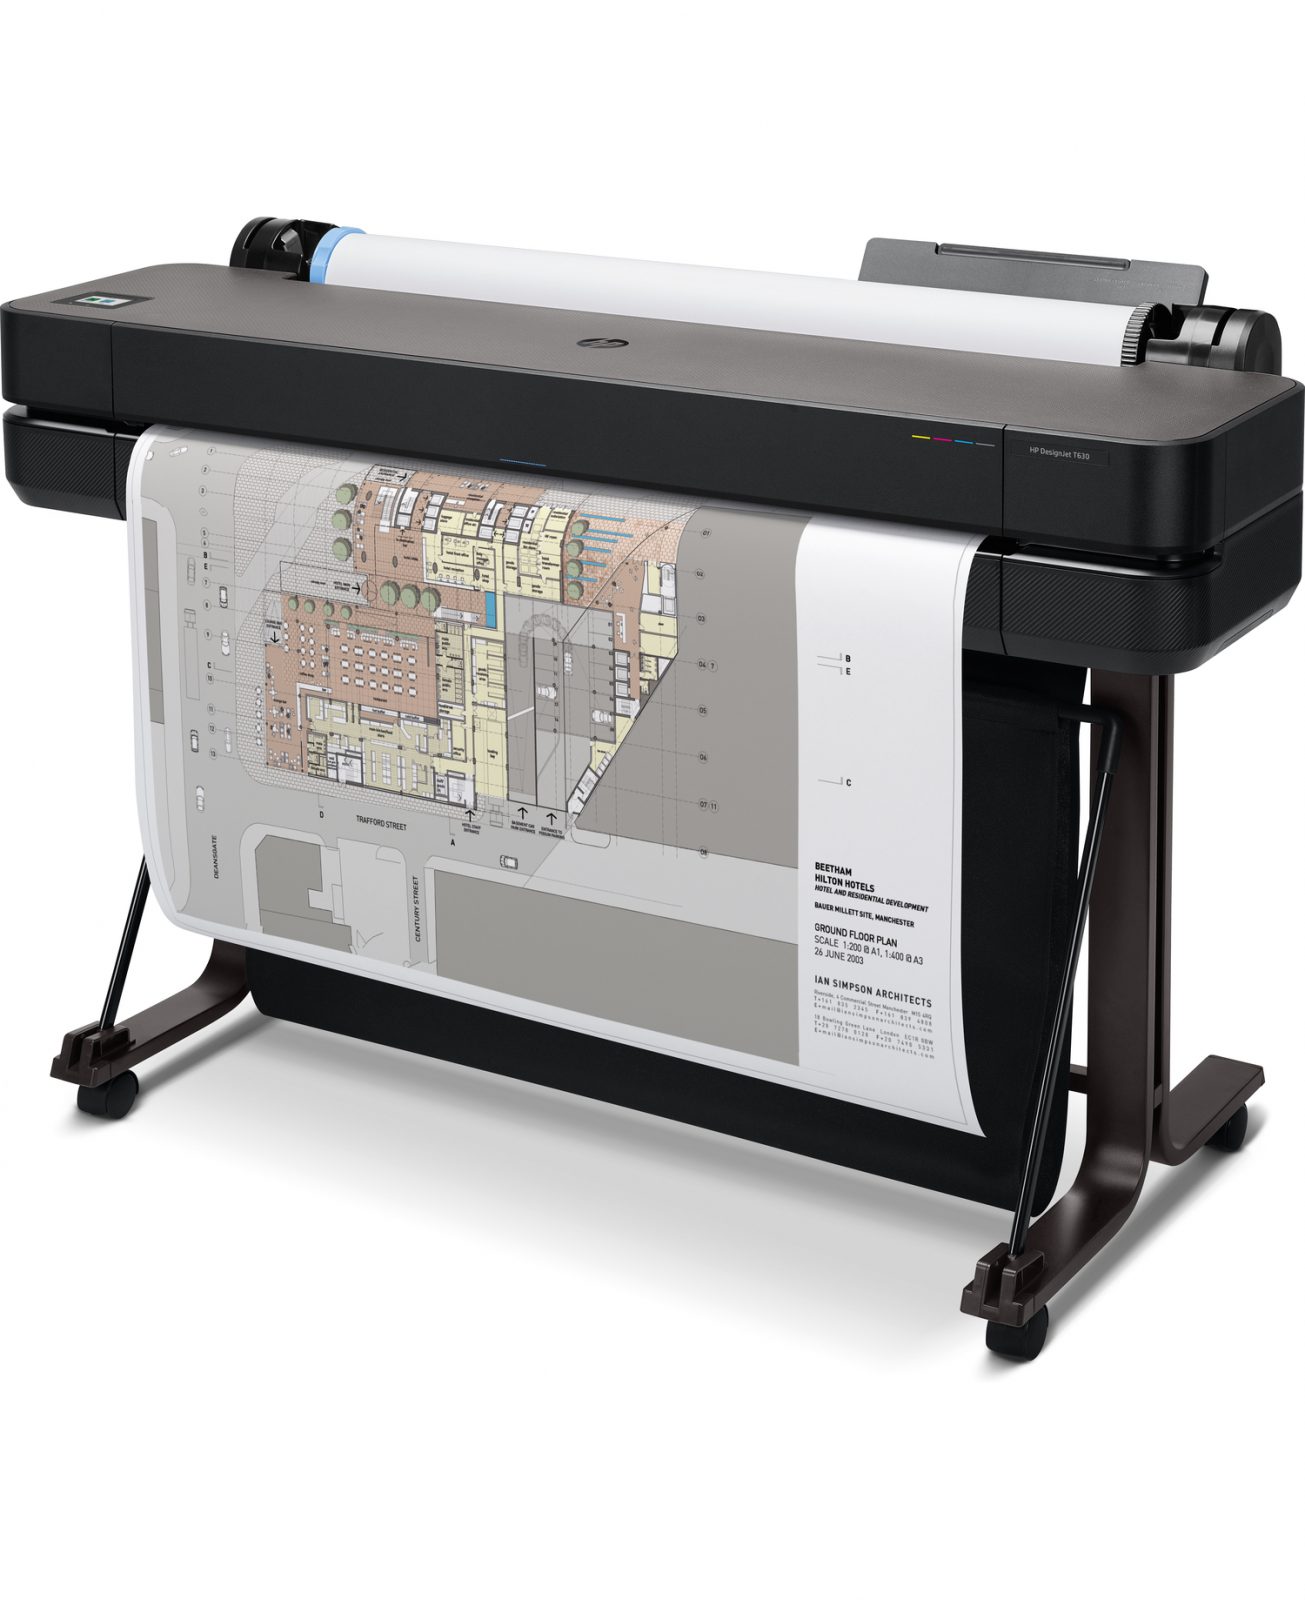 Geleidbaarheid Geldschieter of HP DesignJet T630 Large Format A0 Printer – Design Supply – Design Supply